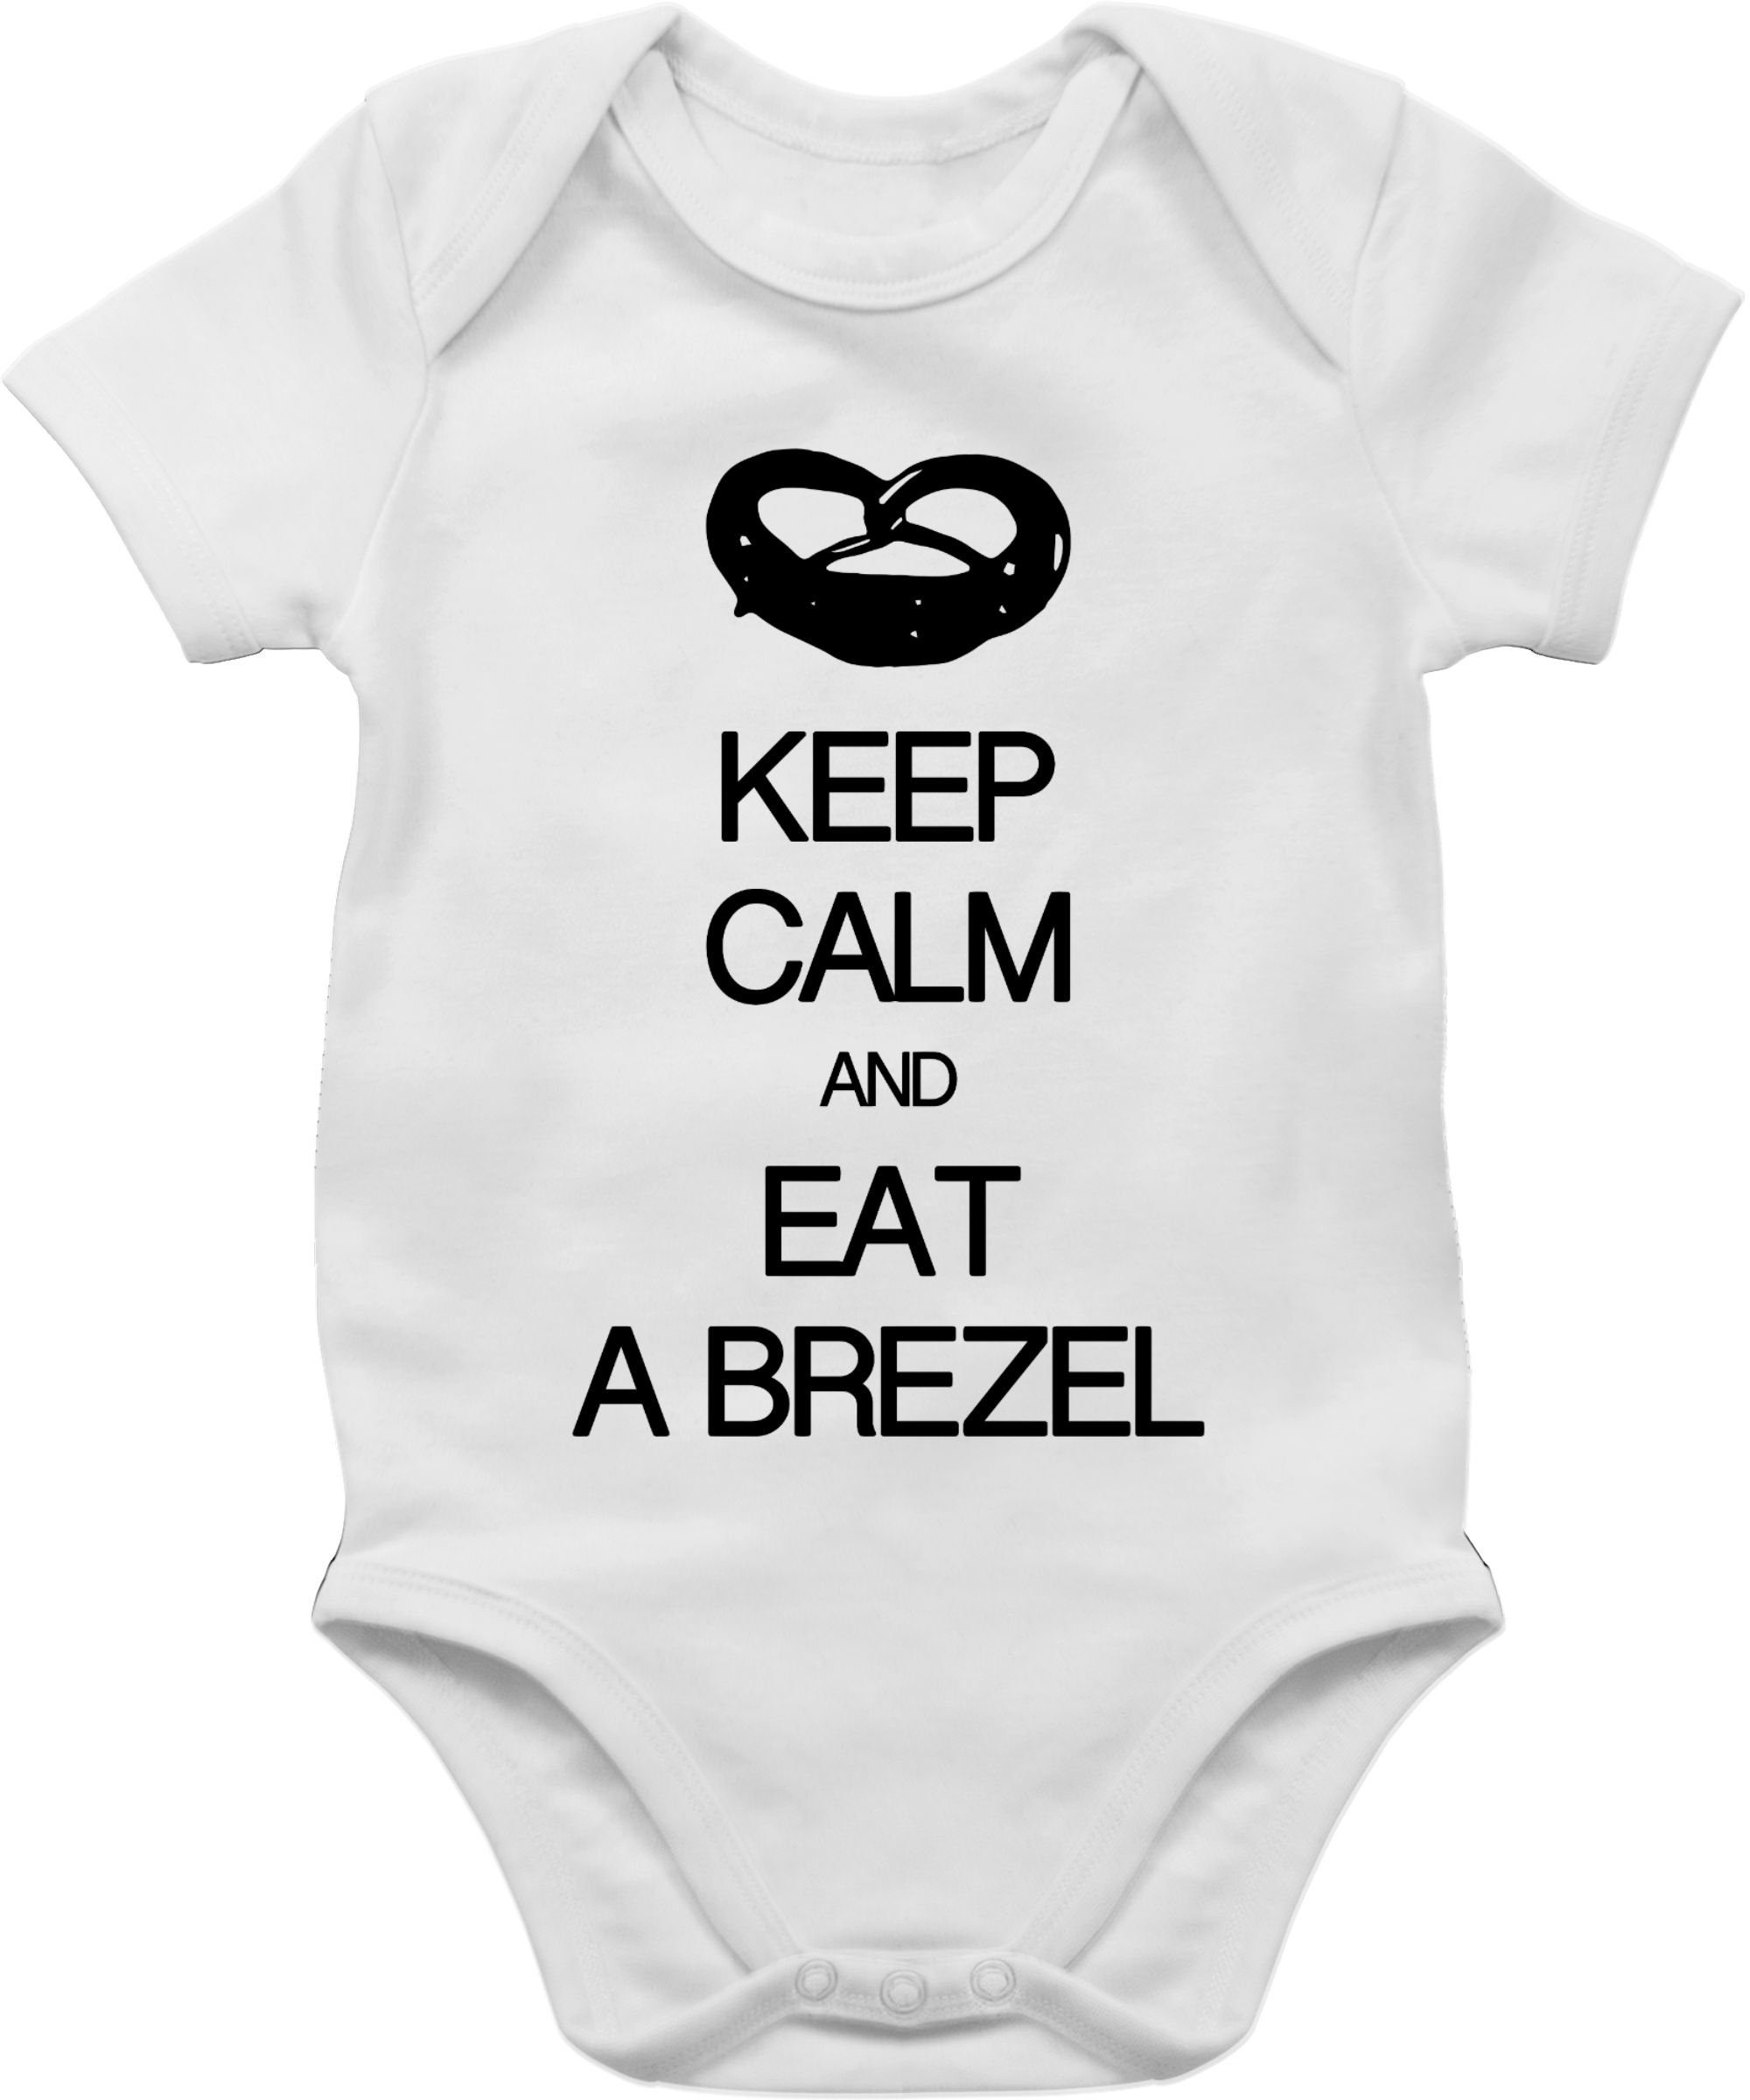 Shirtracer Shirtbody »Keep calm and eat a brezel - Mode für Oktoberfest Baby  Outfit - Baby Body Kurzarm« tracht body baby - strampler bayerisch